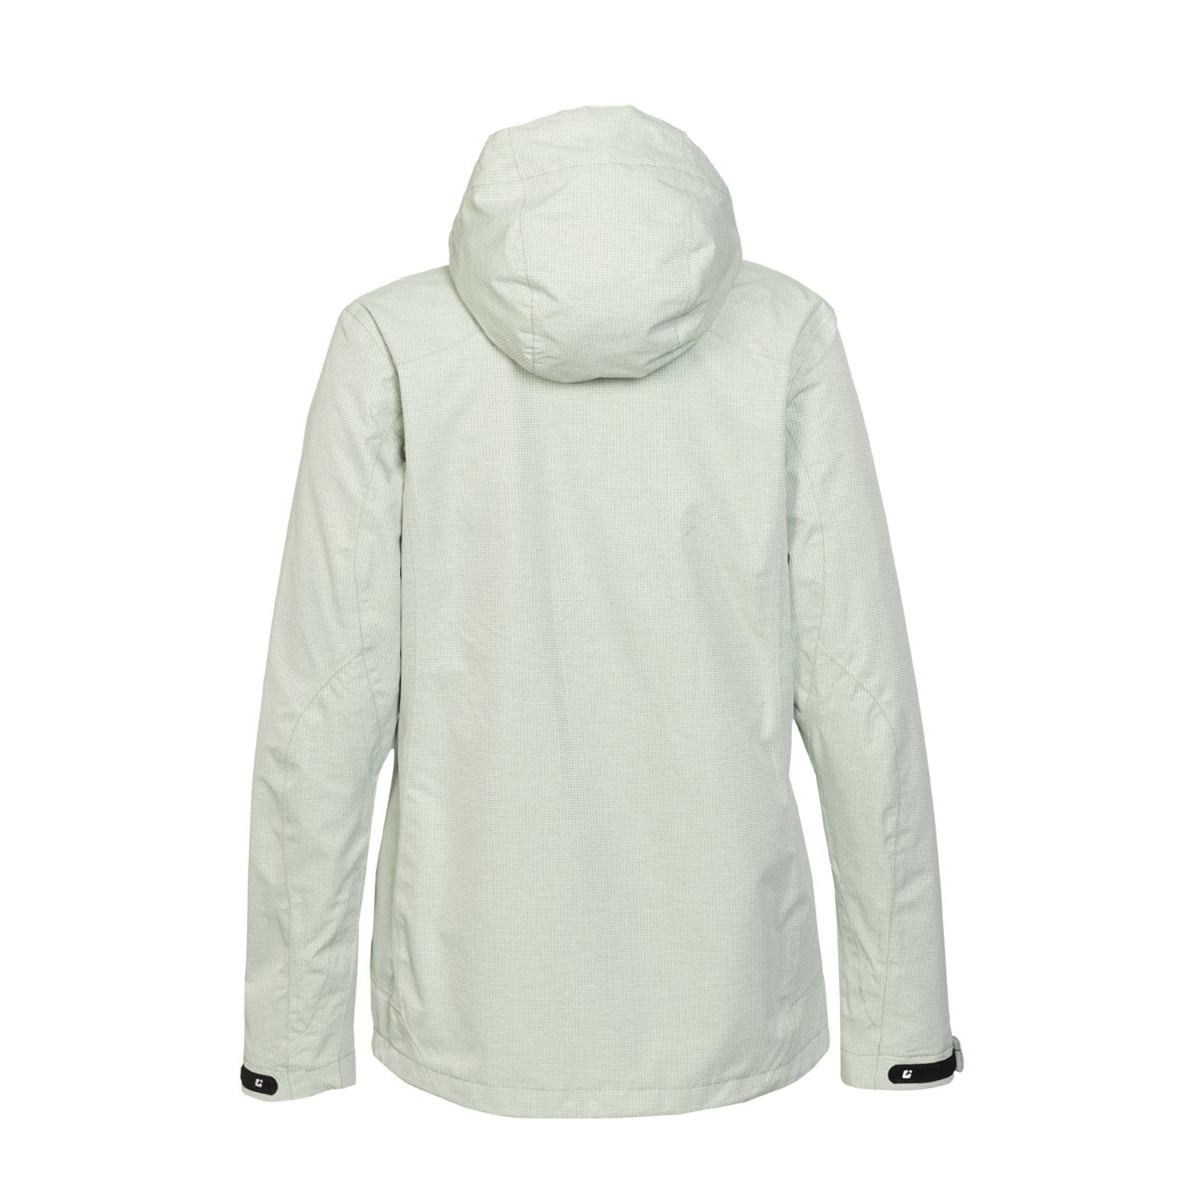 Killtec Women's Inkele Outdoor Jacket, Beige \ Off White,8 - US